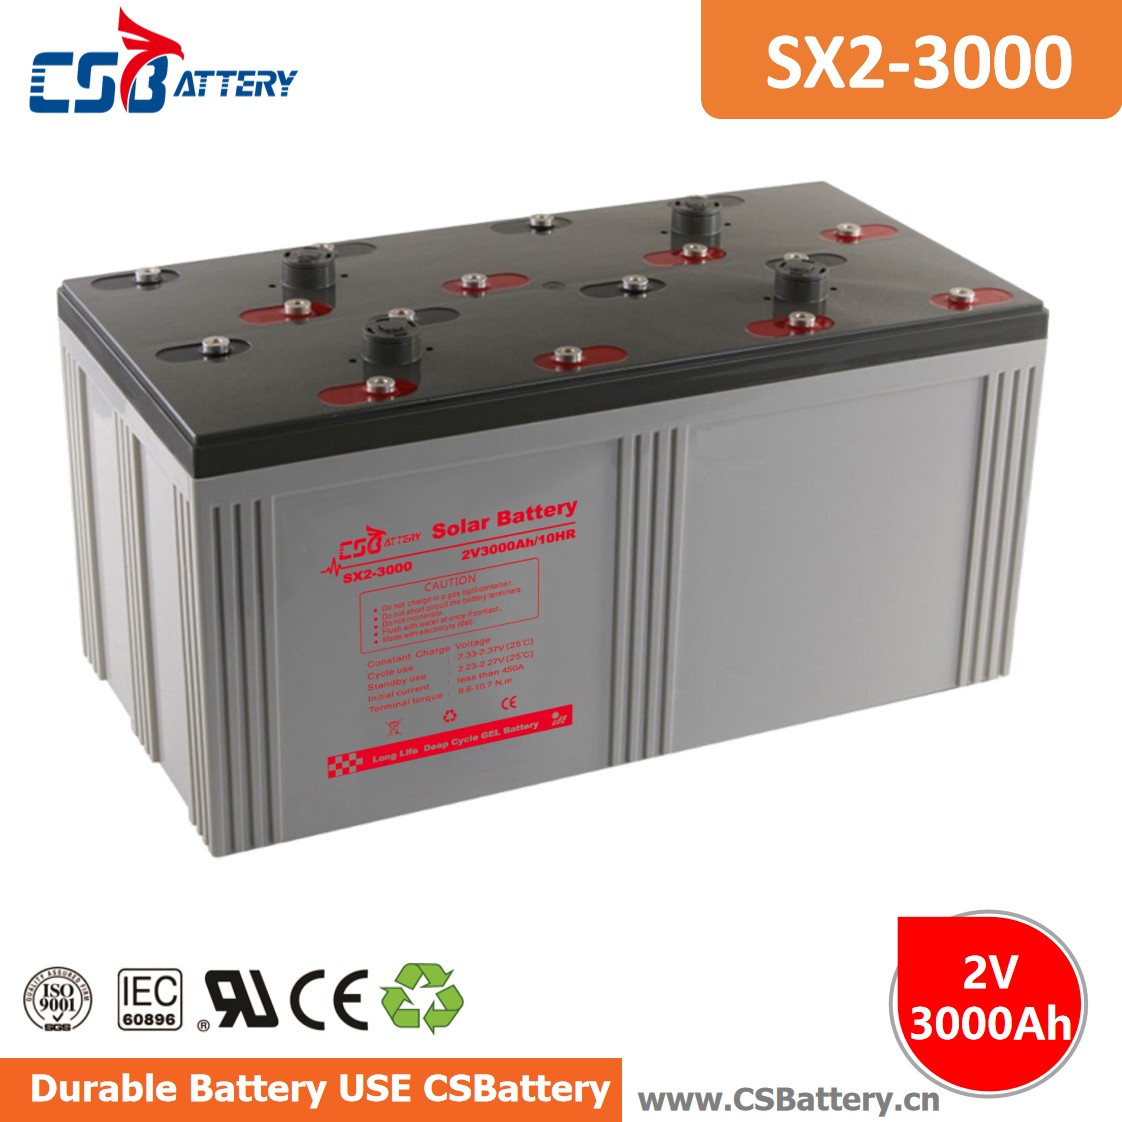 SX2-3000 2V 3000Ah Deep Cycle GEL Battery